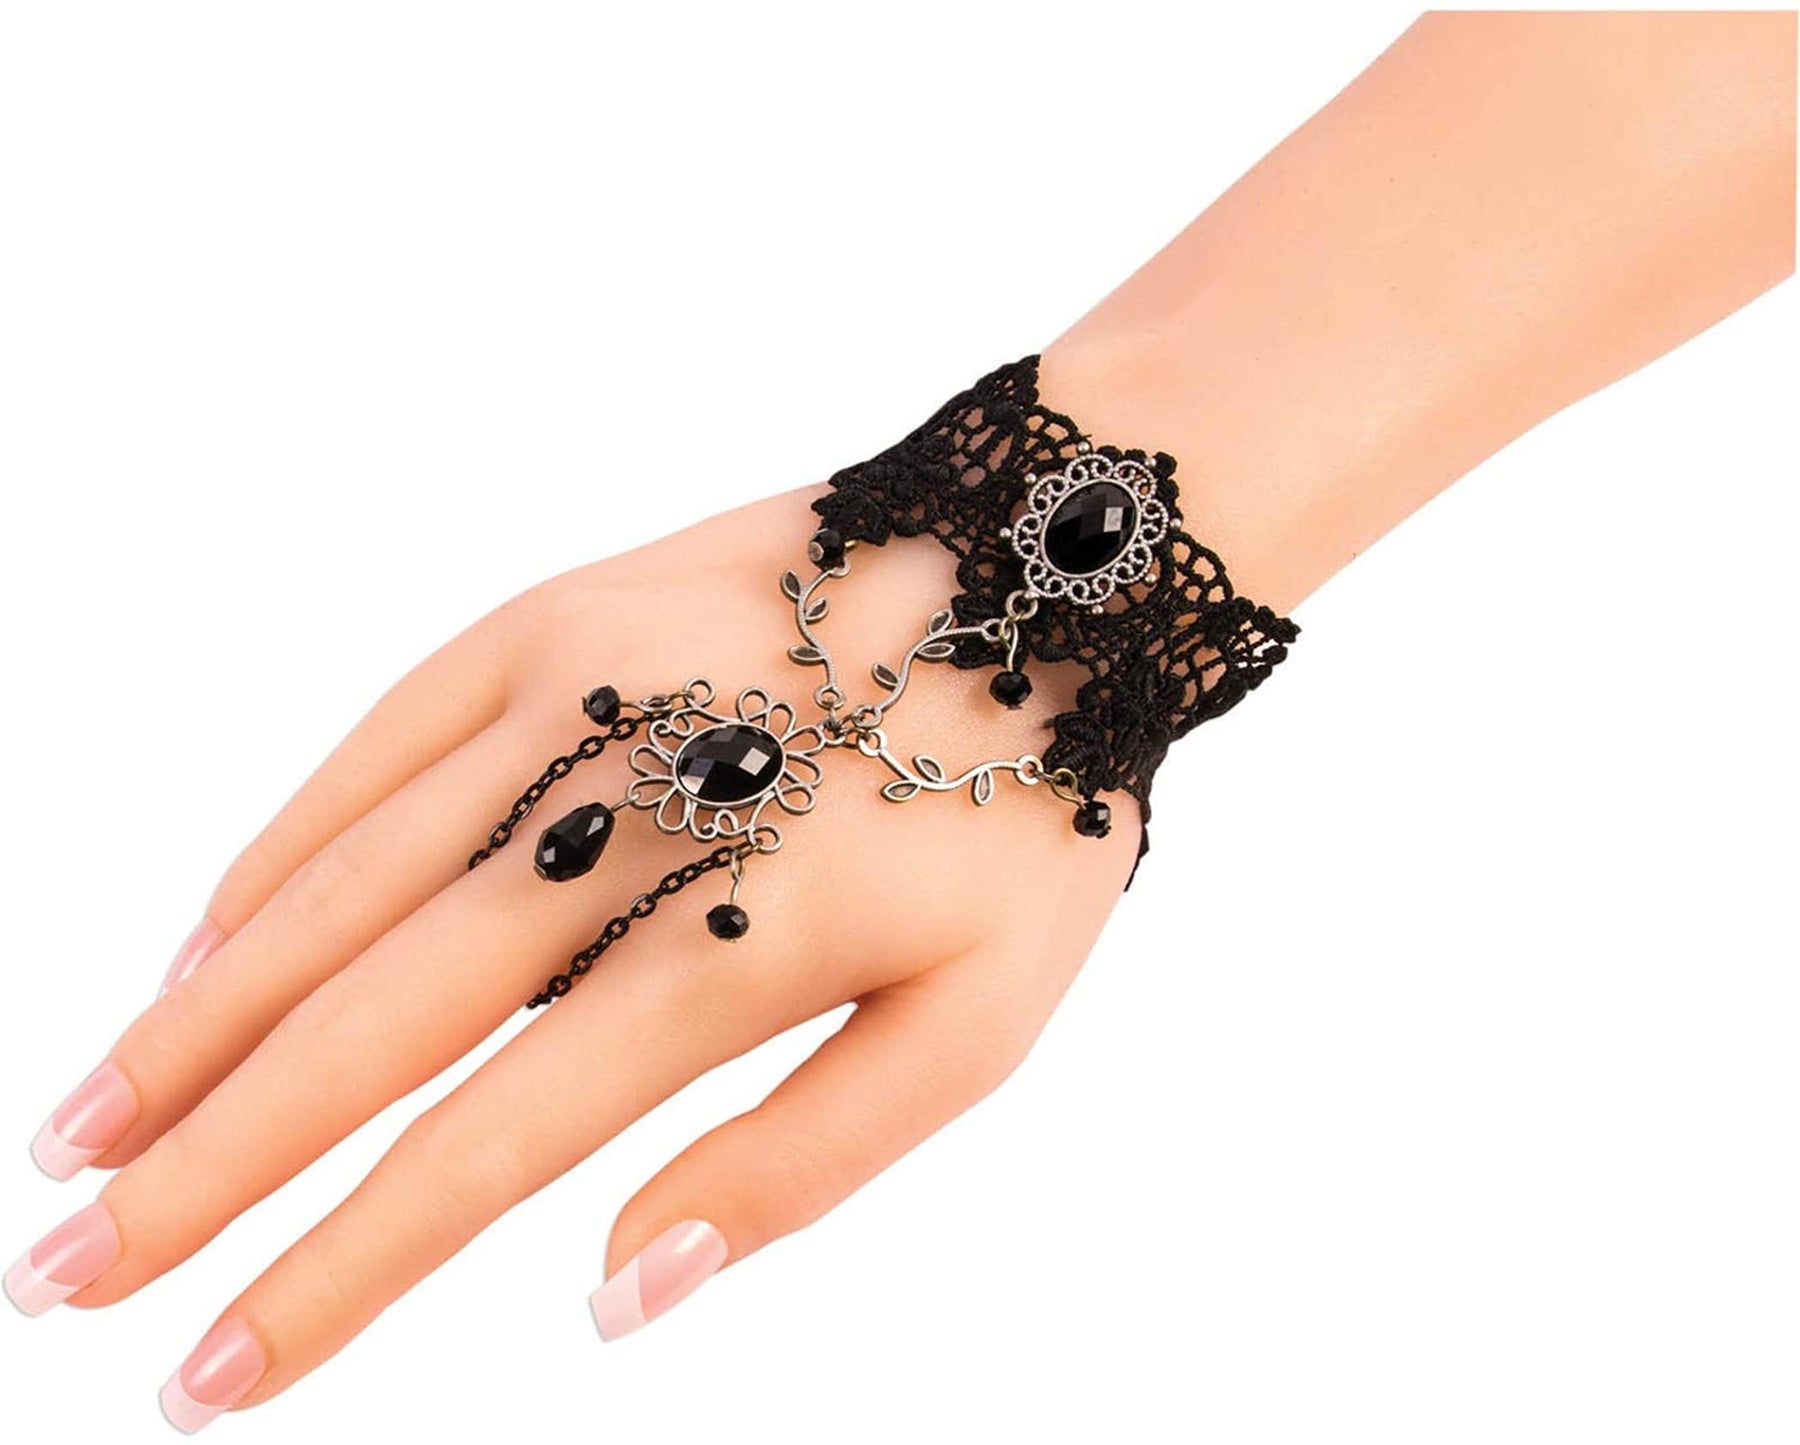 Dark Royalty Adult Costume Hand Jewelry